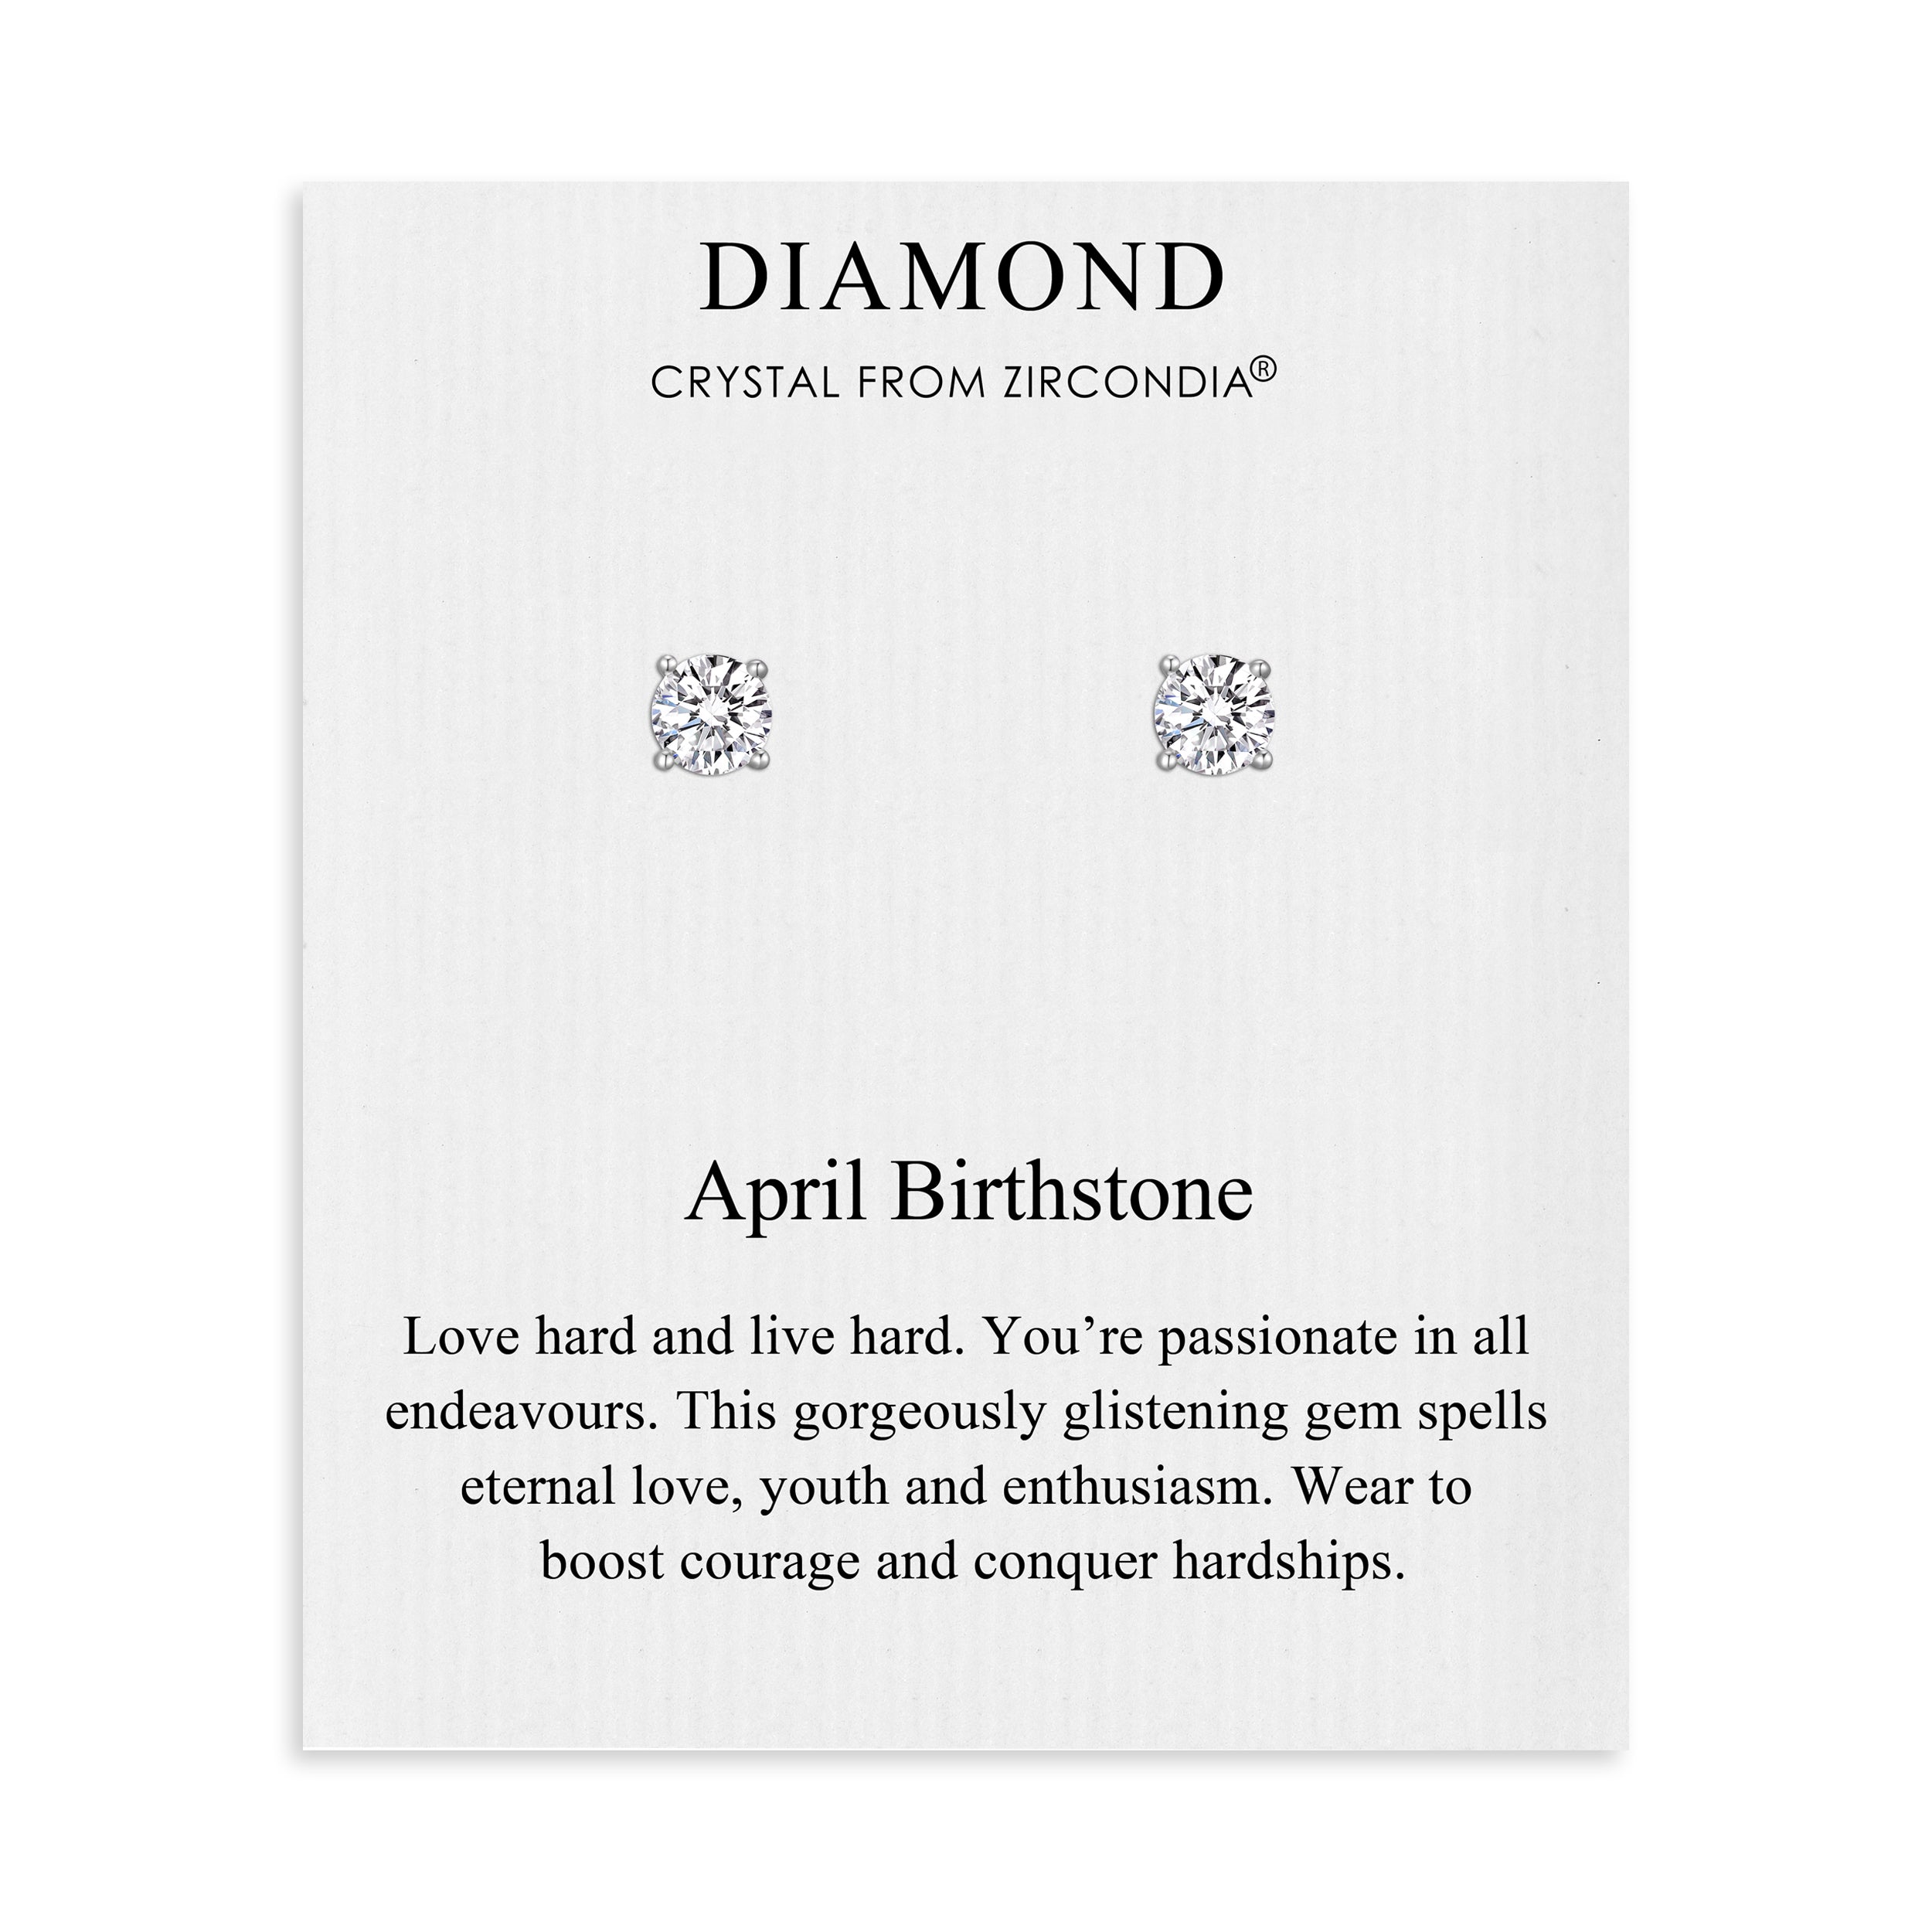 April (Diamond) Birthstone Earrings Created with Zircondia® Crystals by Philip Jones Jewellery